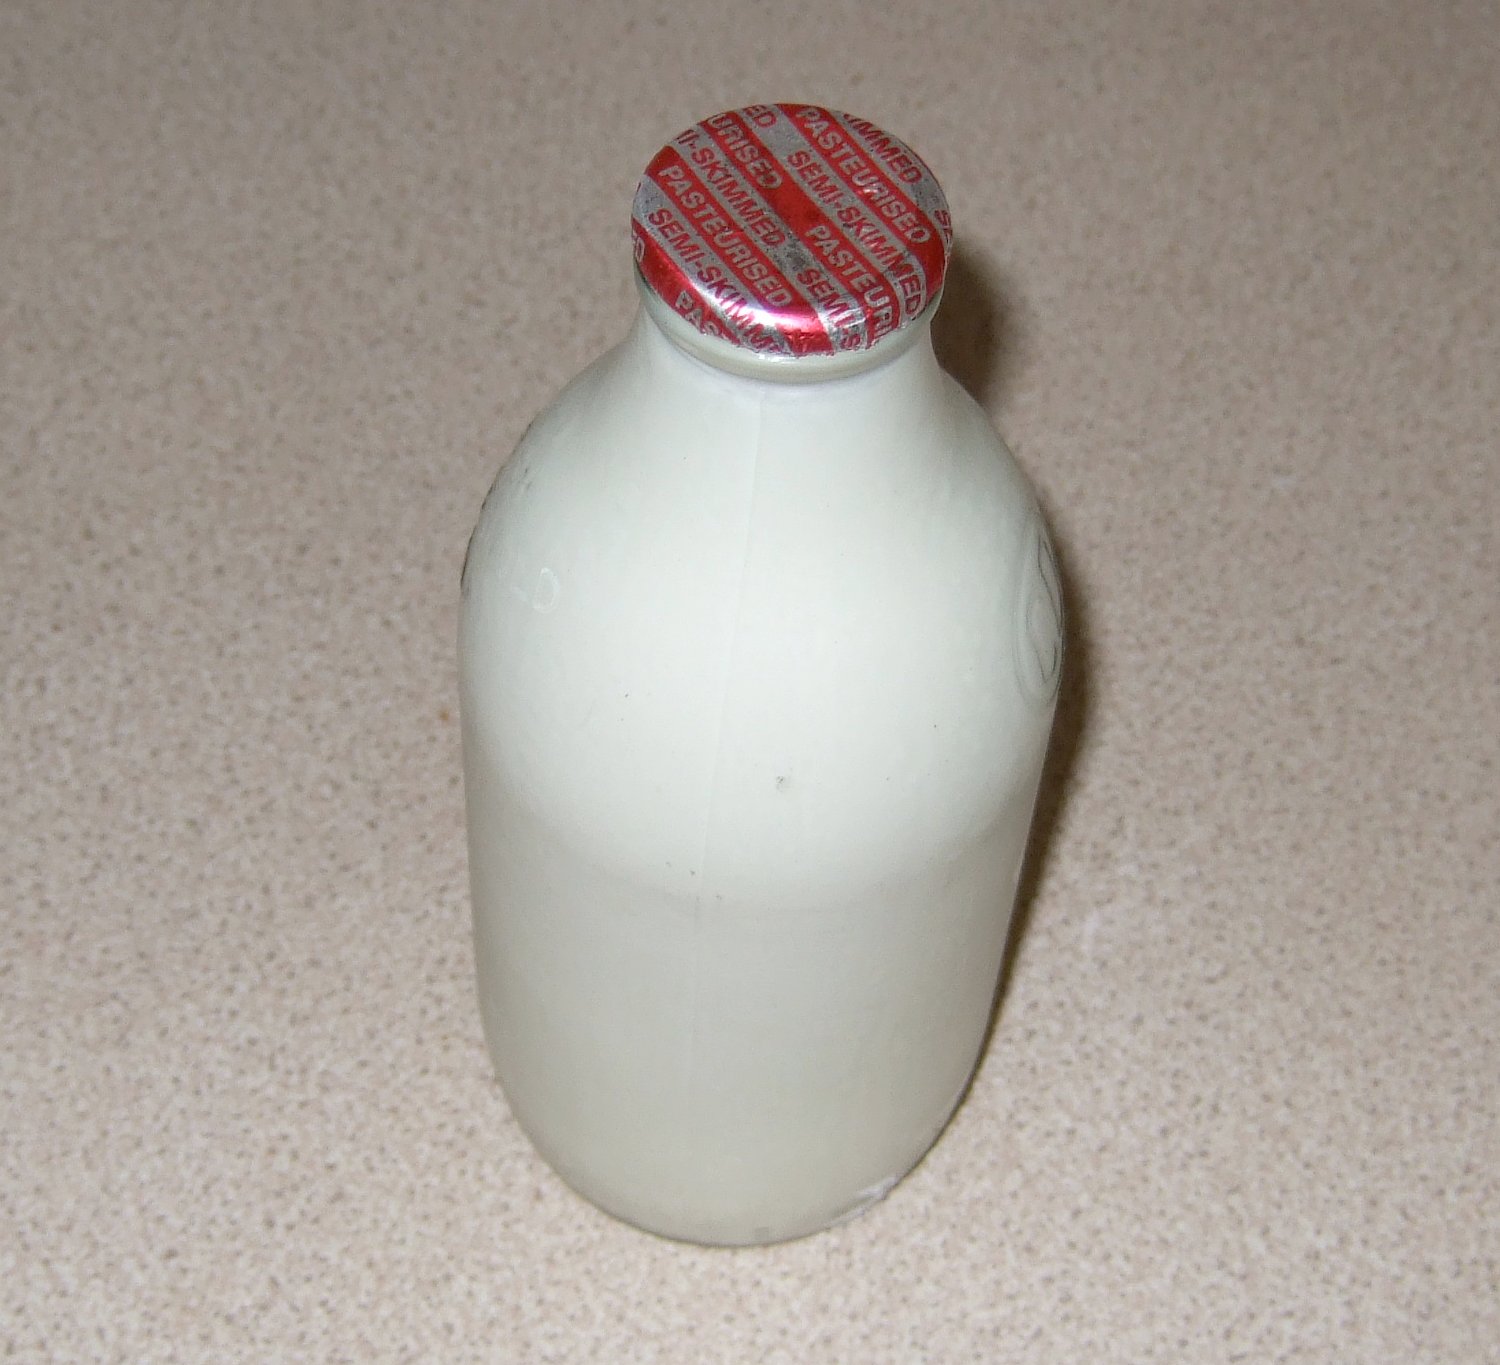 Bottle of Milk